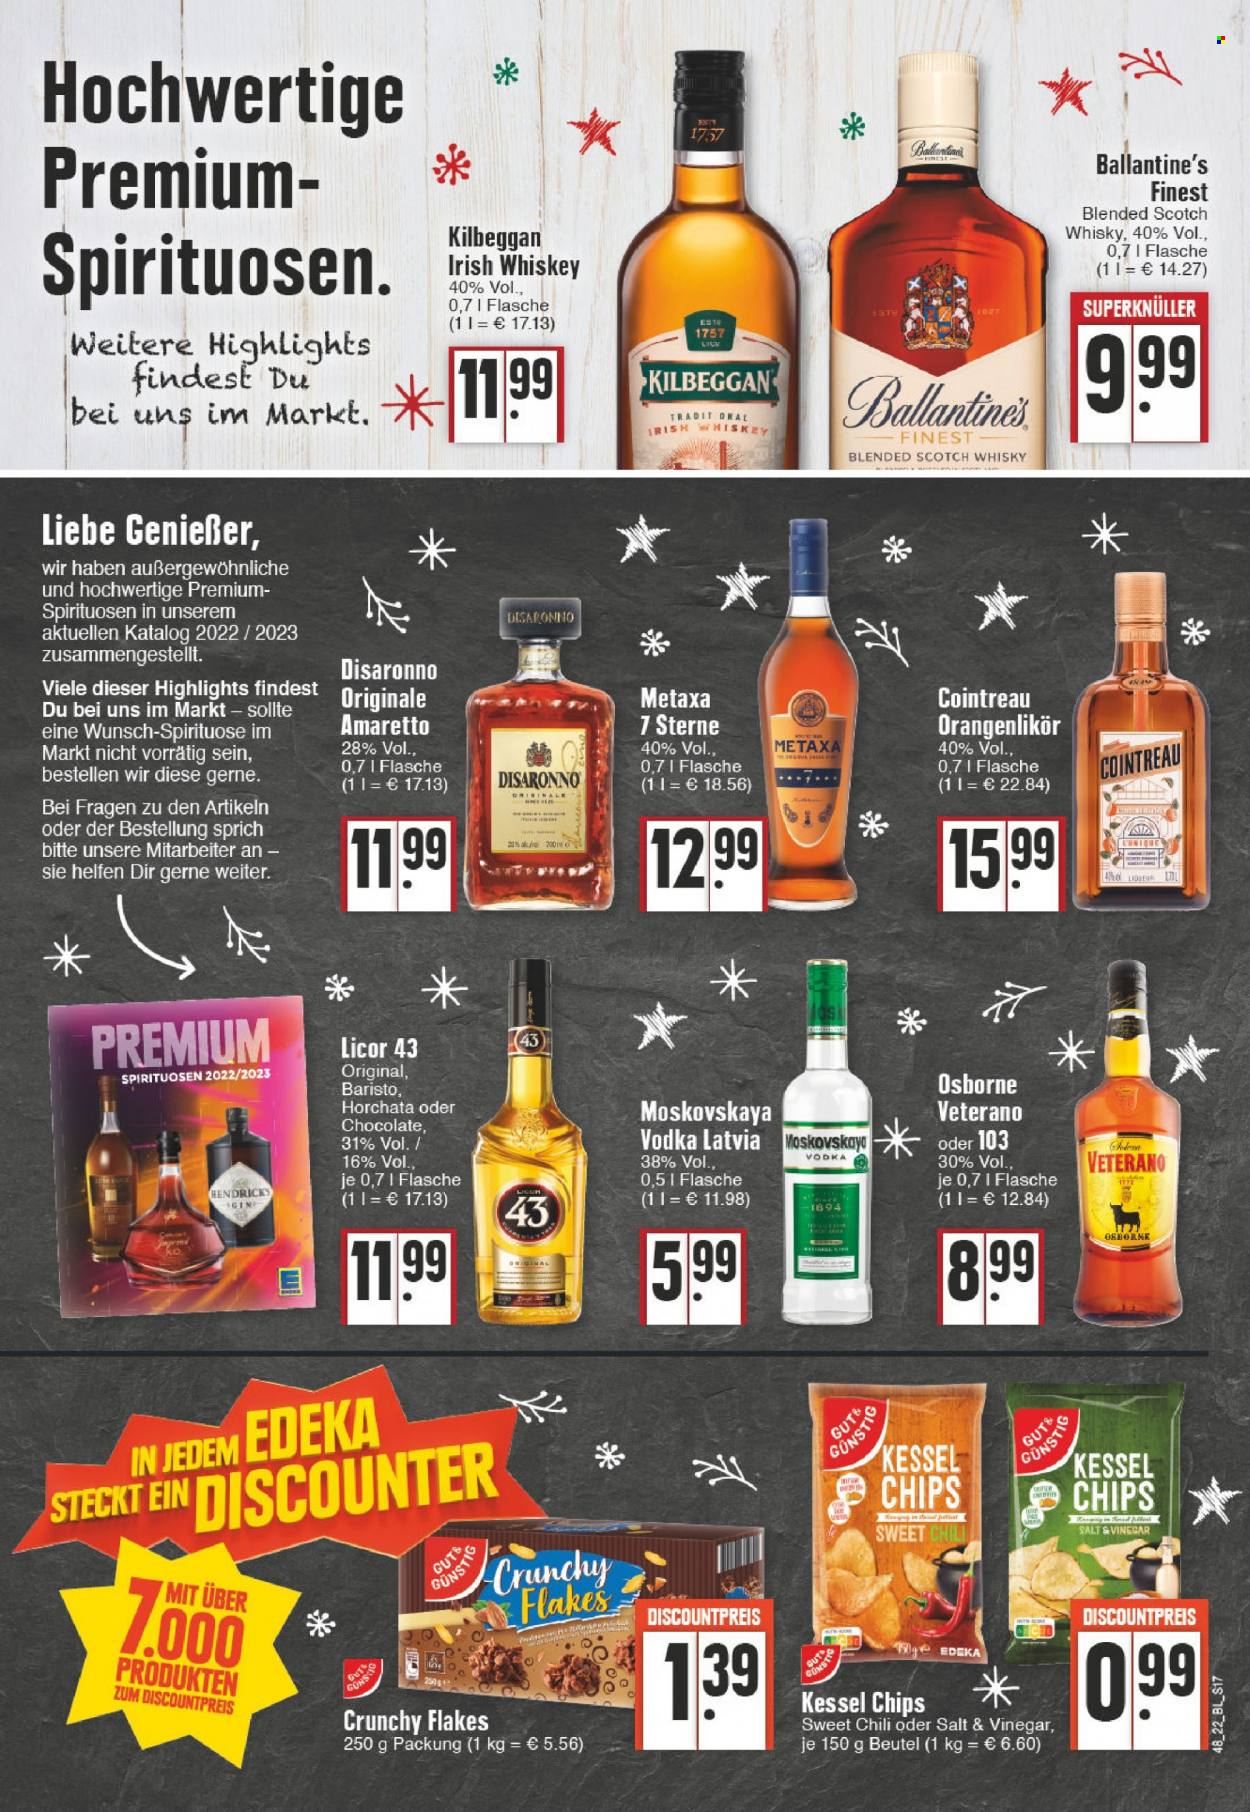 thumbnail - Prospekte Edeka - 28.11.2022 - 3.12.2022 - Produkte in Aktion - Alkohol, Chips, Blended Scotch Whisky, Whiskey, Vodka, Scotch Whisky, Licor 43, Irish Whiskey, Amaretto, Metaxa, Ballantine's, Veterano, Moskovskaya. Seite 18.